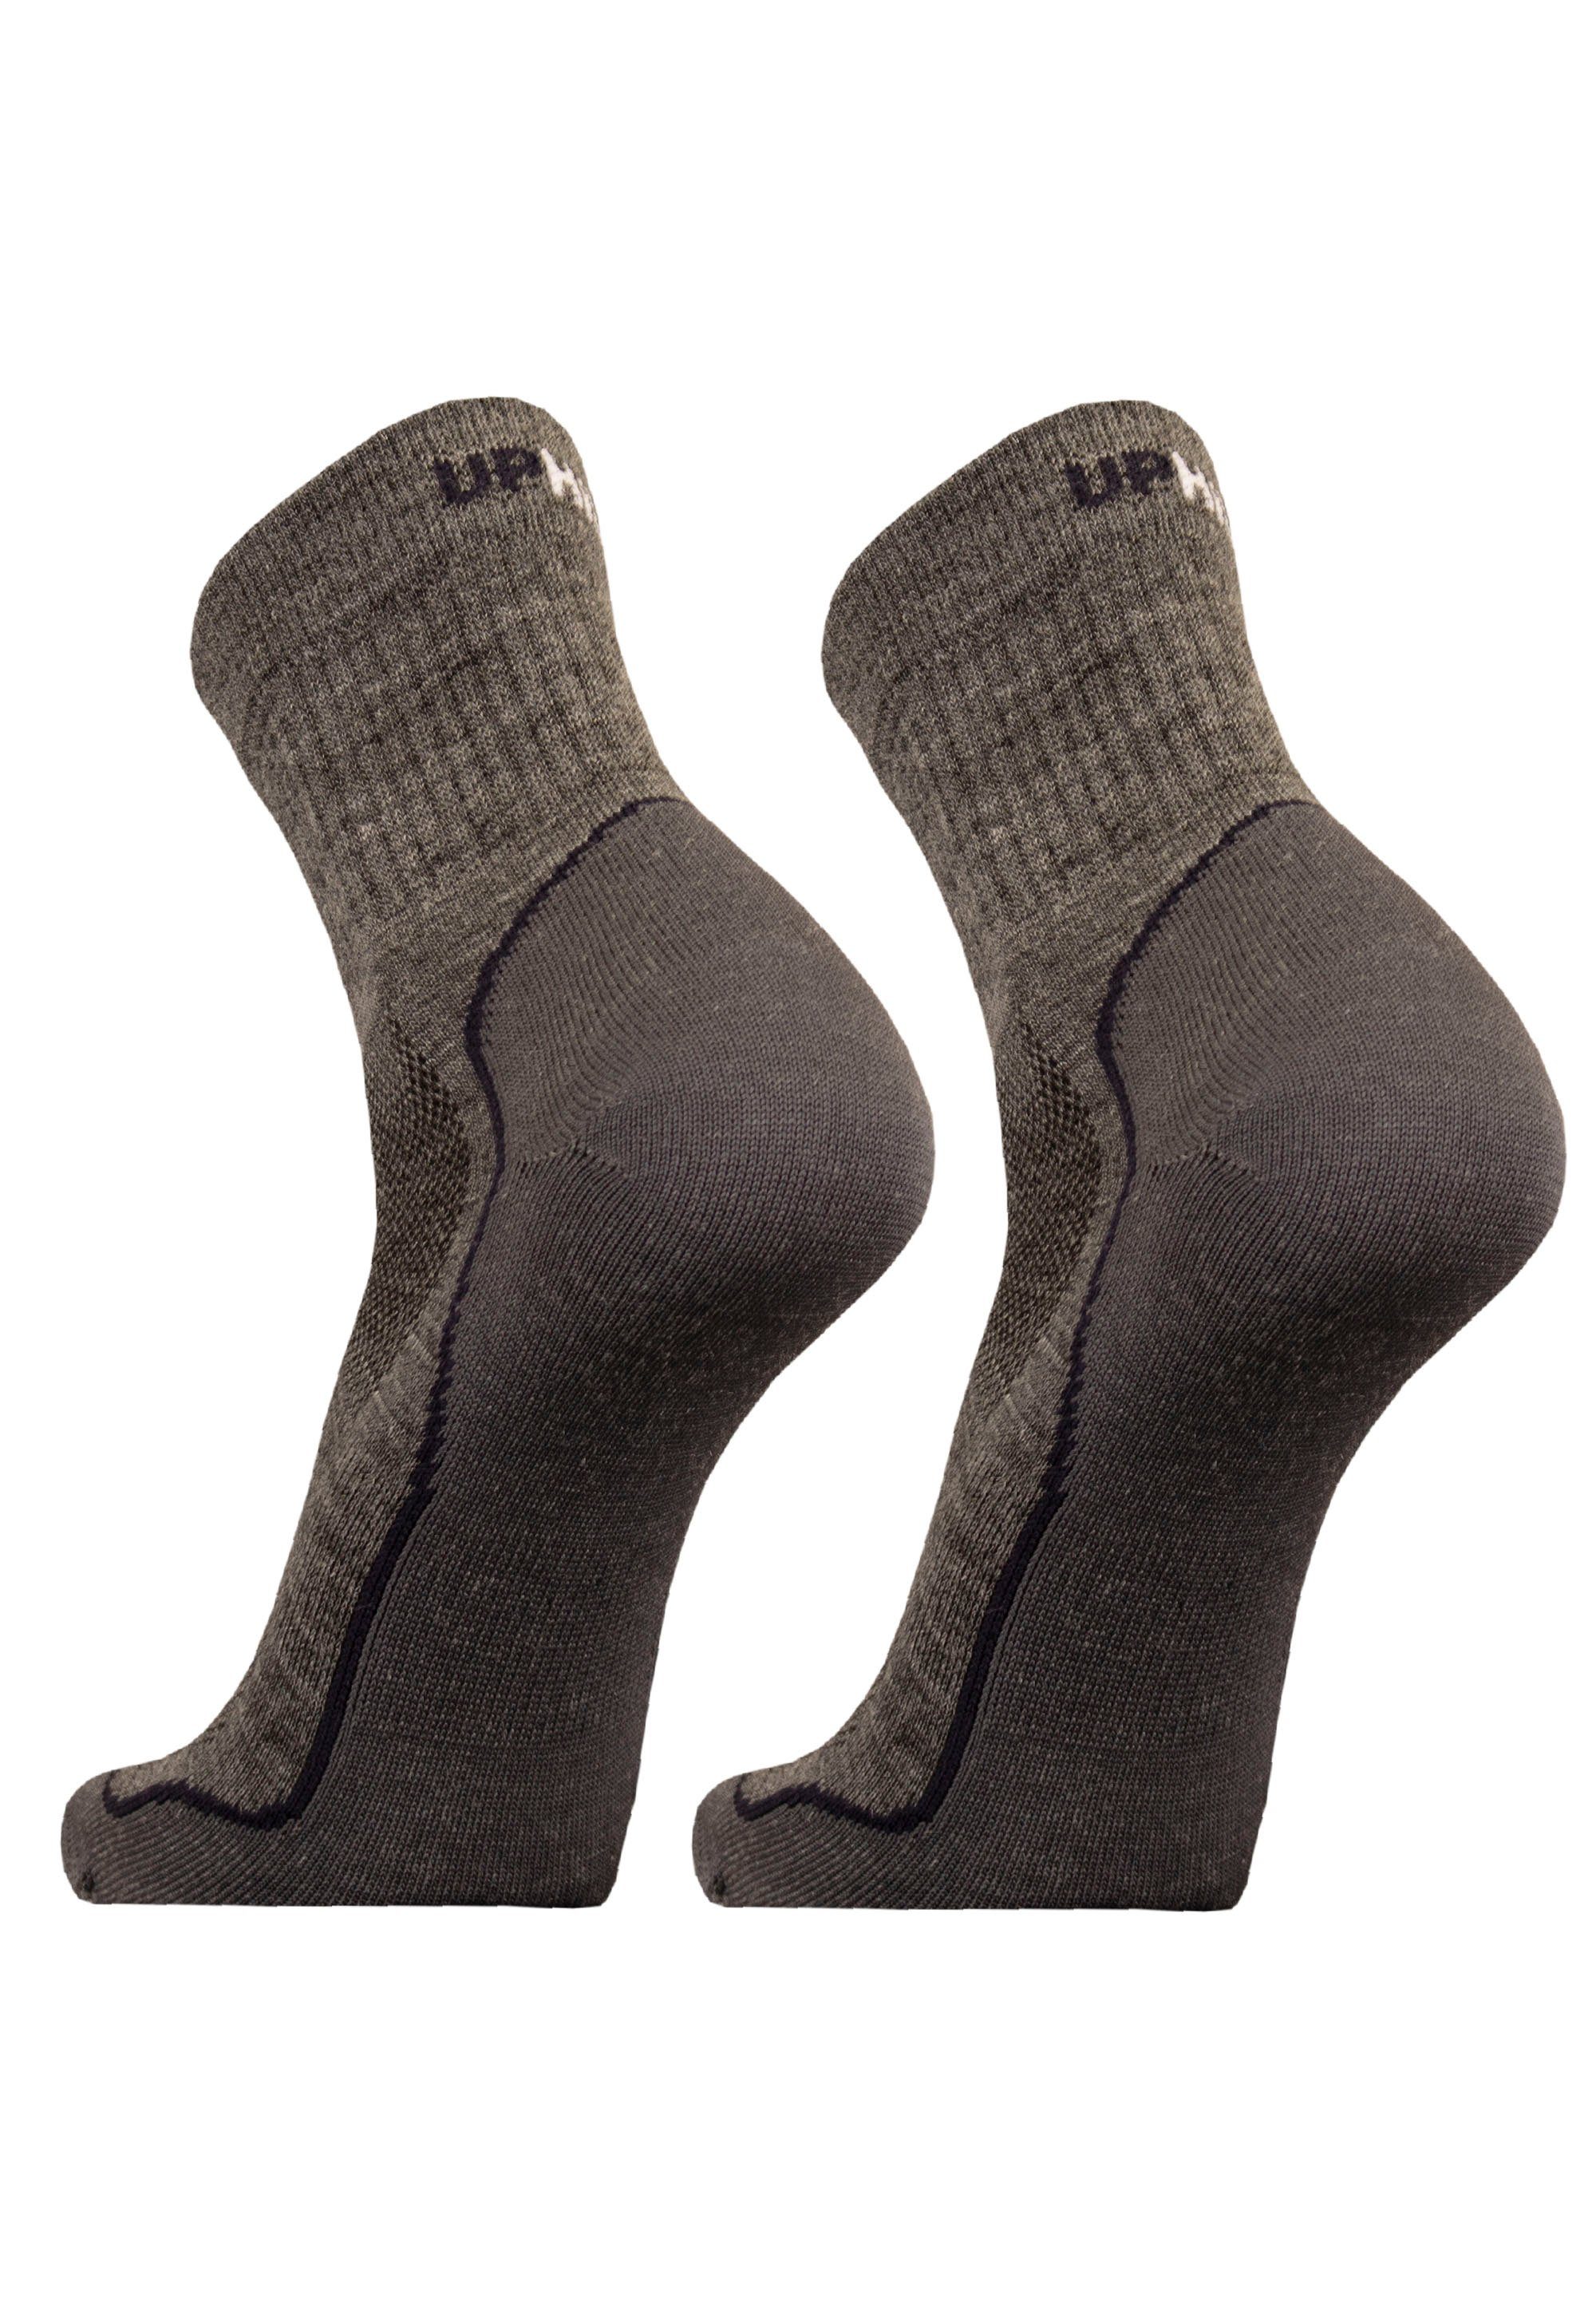 UphillSport Socken (2-Paar) ohne reibende Nähte